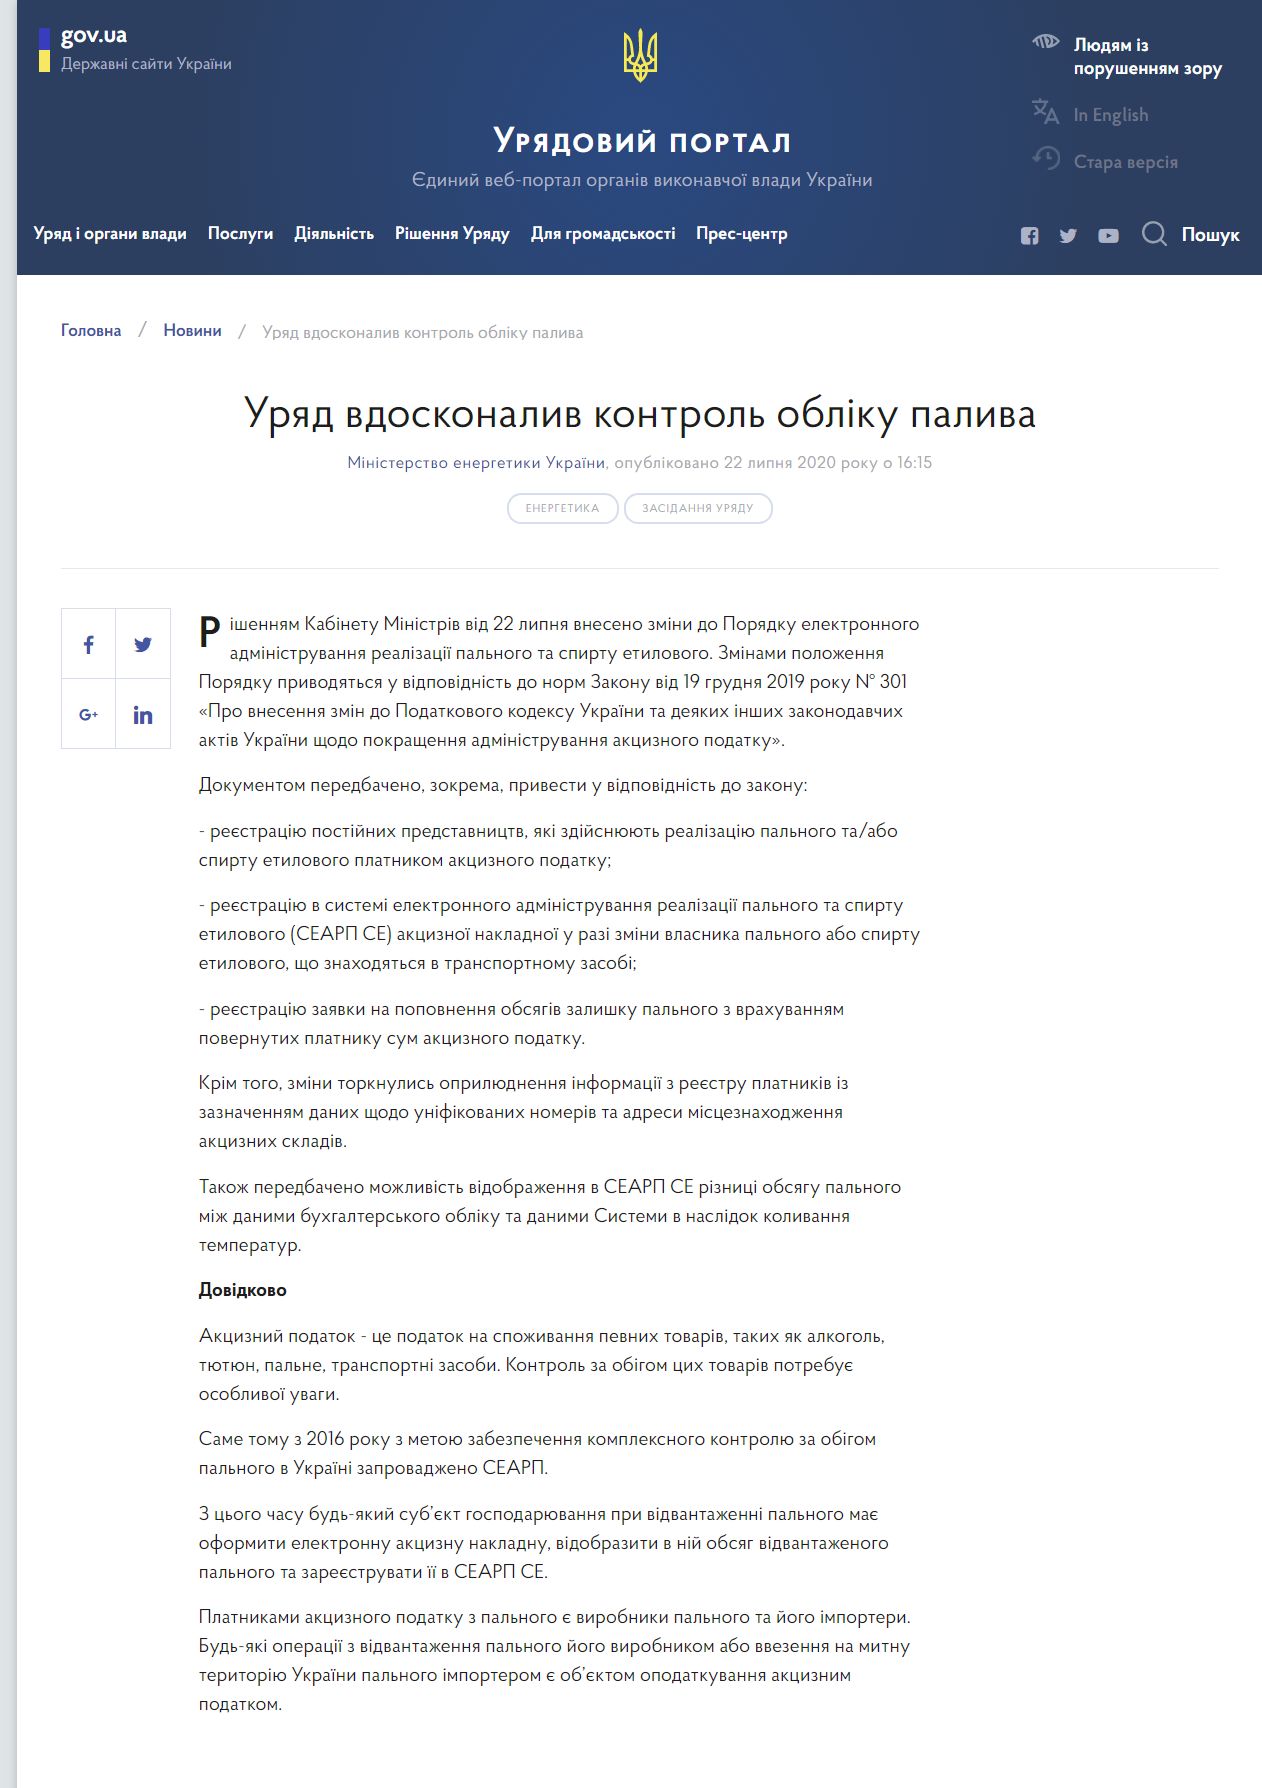 https://www.kmu.gov.ua/news/uryad-vdoskonaliv-kontrol-obliku-paliva